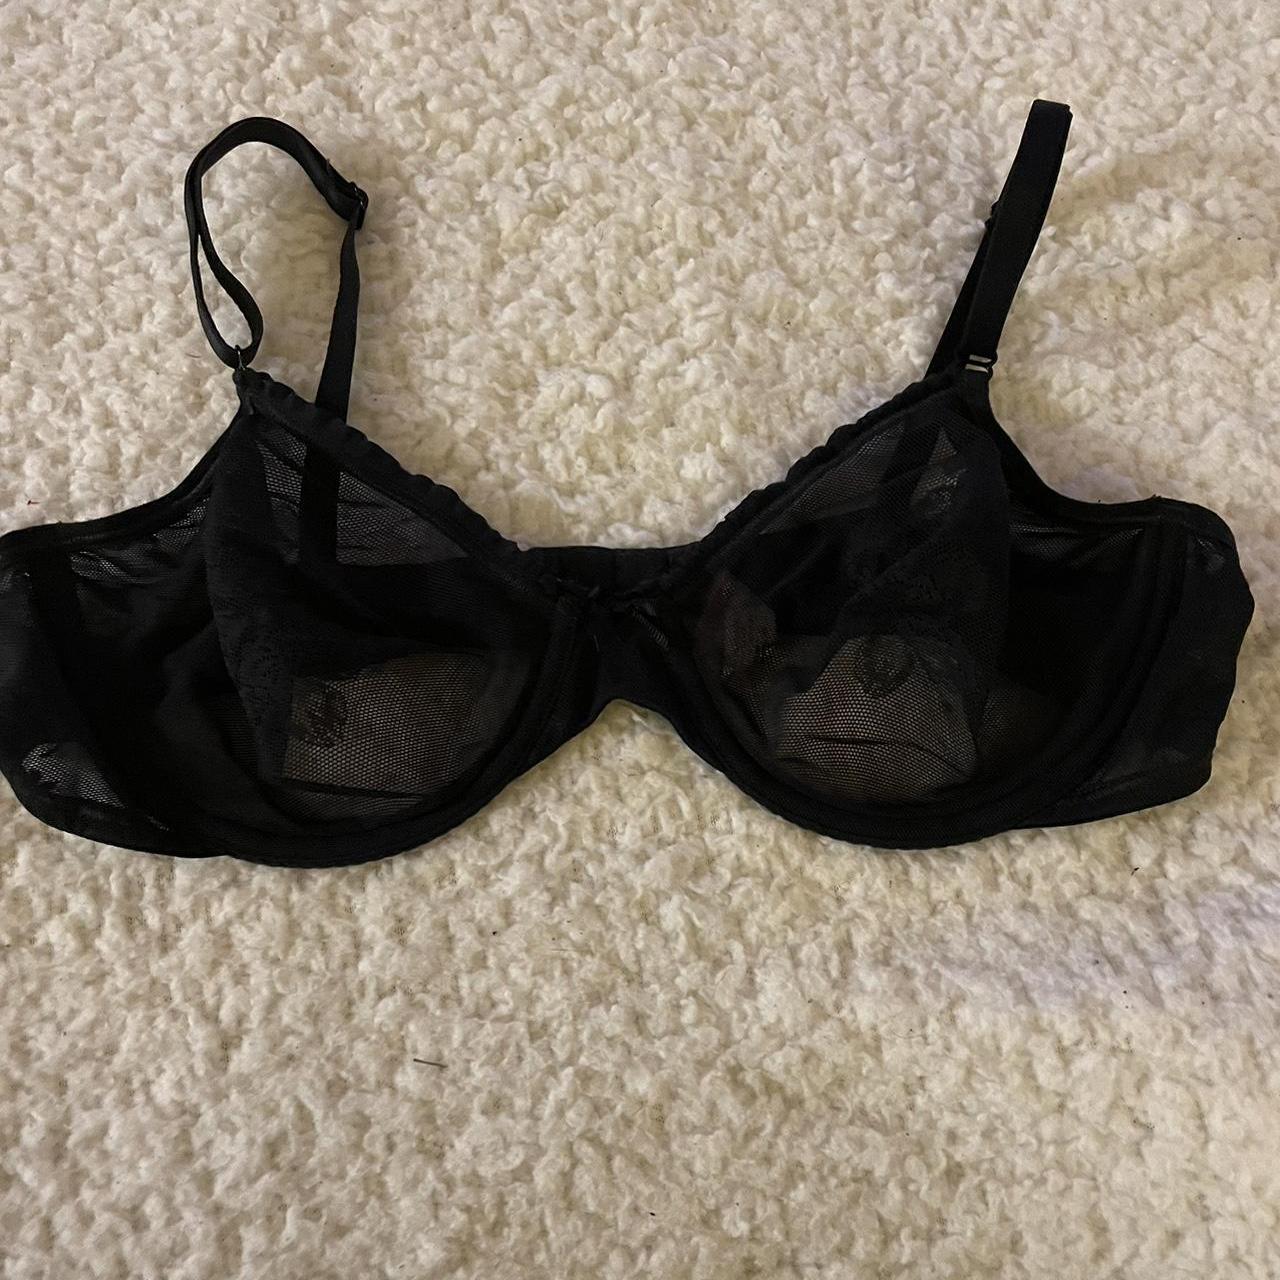 Victoria secret 34DD bra #lingerie #victoriasecret - Depop